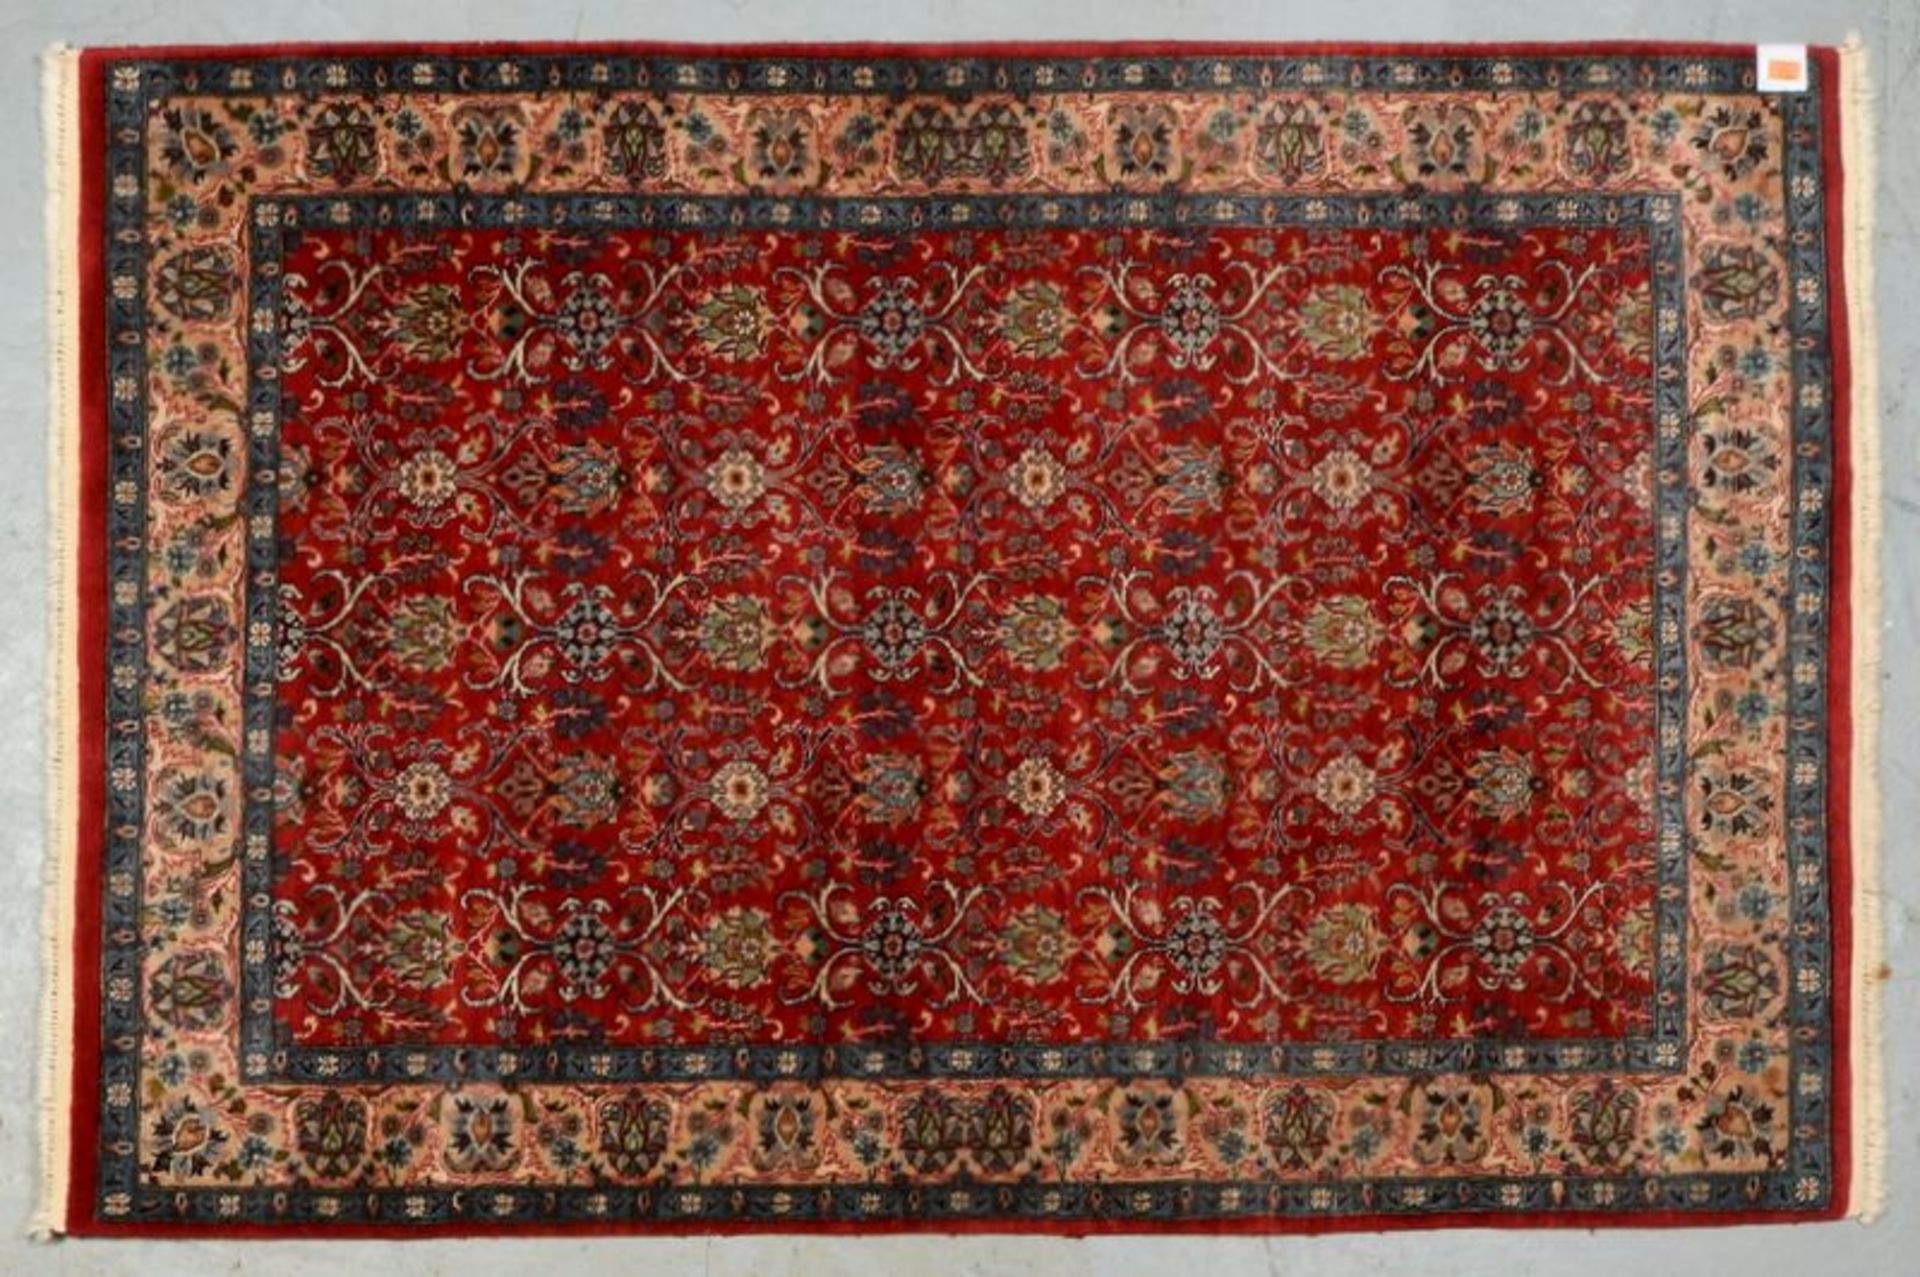 Orientteppich (Lahore/Pakistan), feine feste Knüpfung, durchgemustert, hochflorig - dichter Flor;